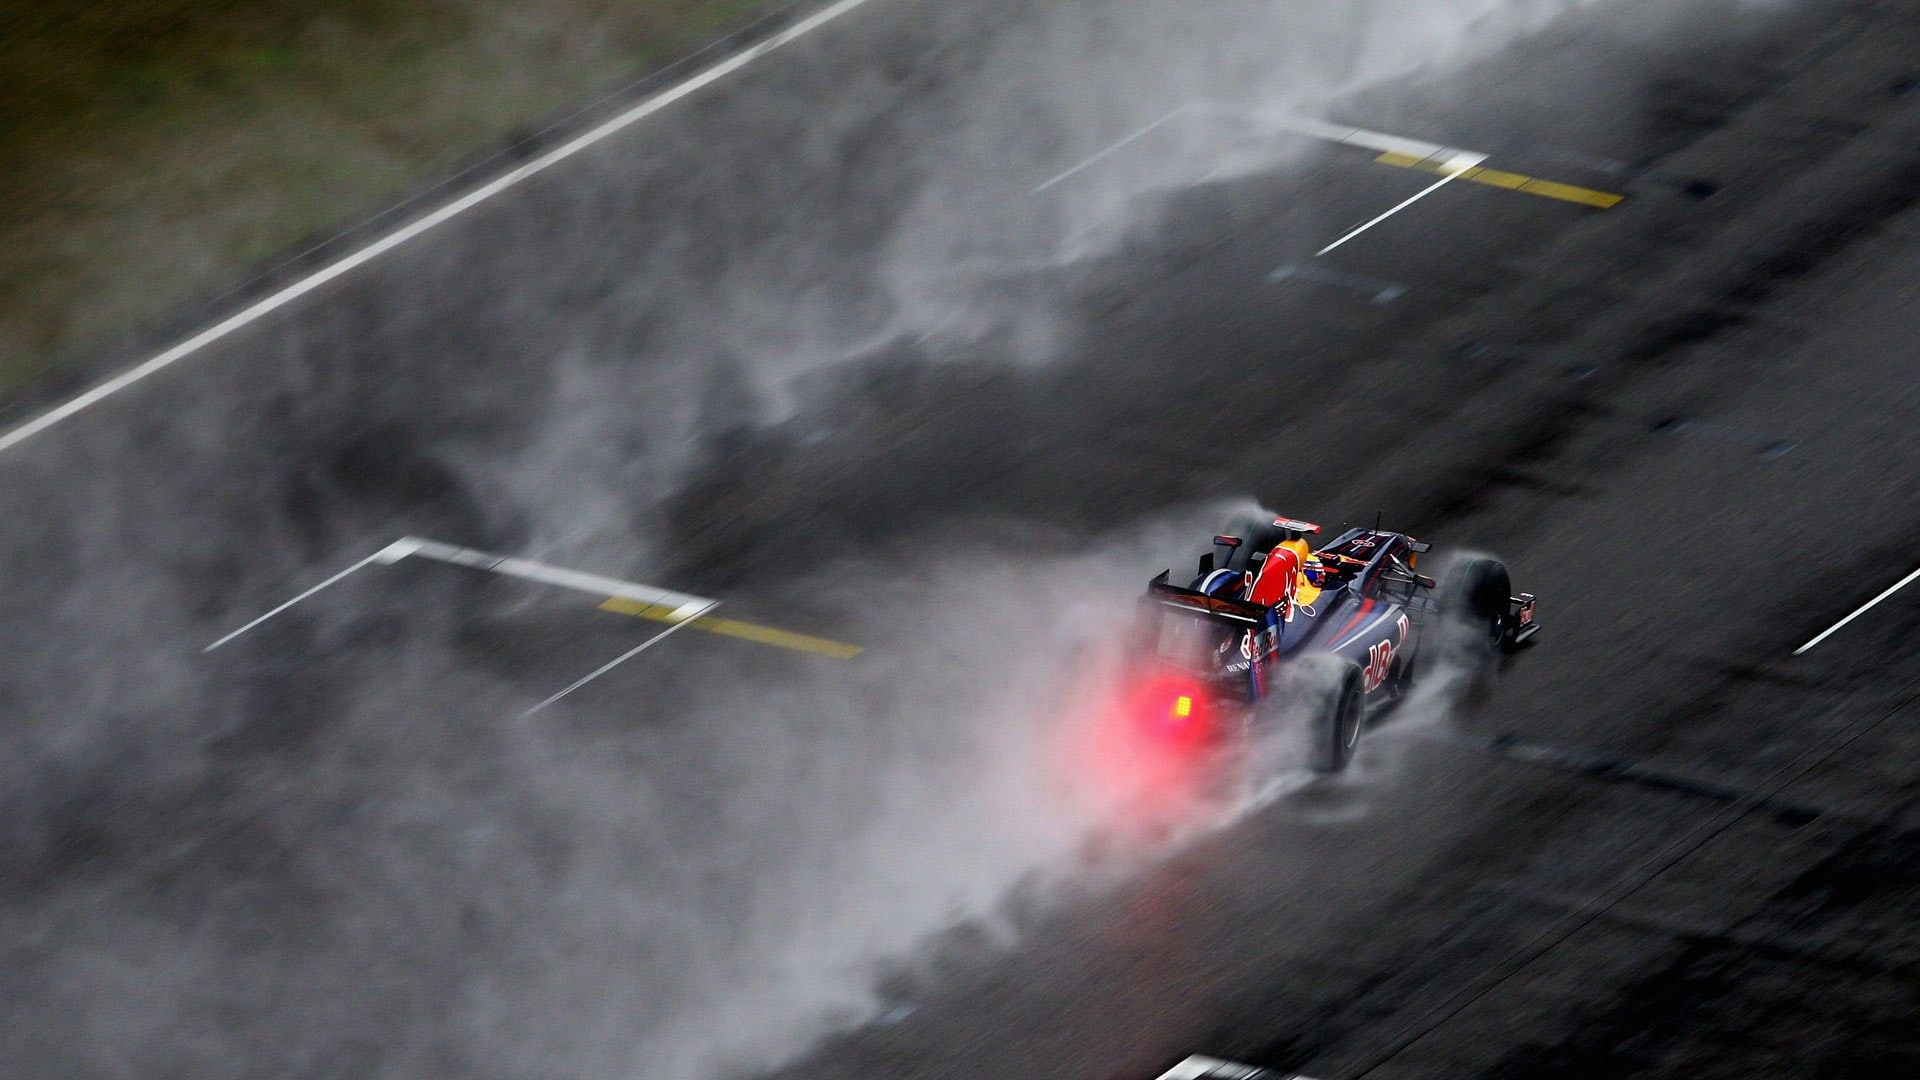 Race Car Race Track Formula One F1 Rain Mist HD #cars #car #race #track #mist #rain #f1 #one #formula P #wallpa. Widescreen wallpaper, Racing, Car wallpaper